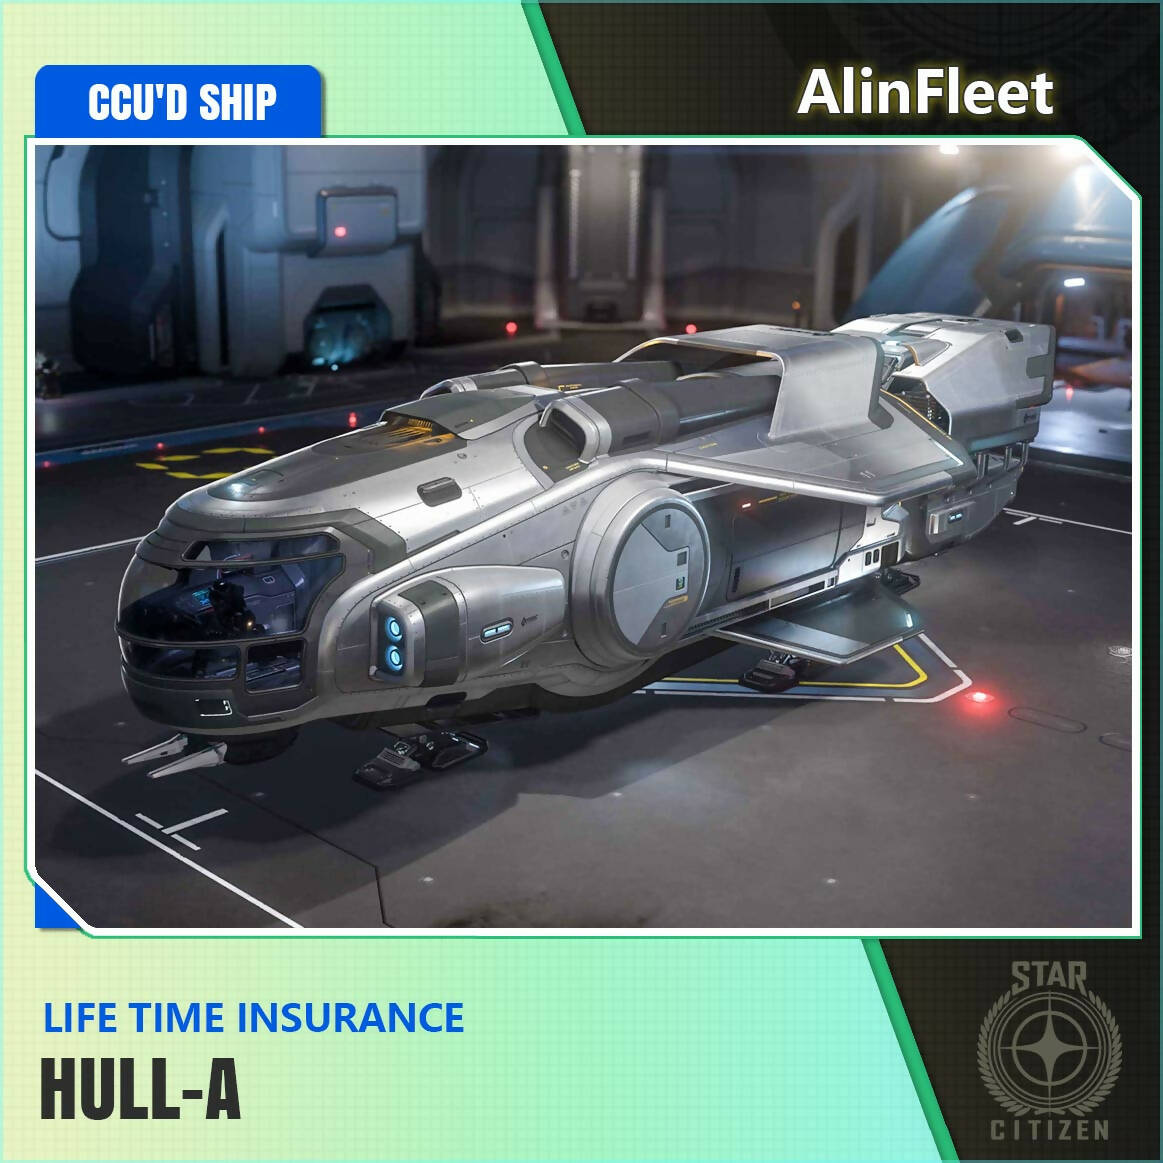 Hull A - LTI Insurance - CCU'd Ship